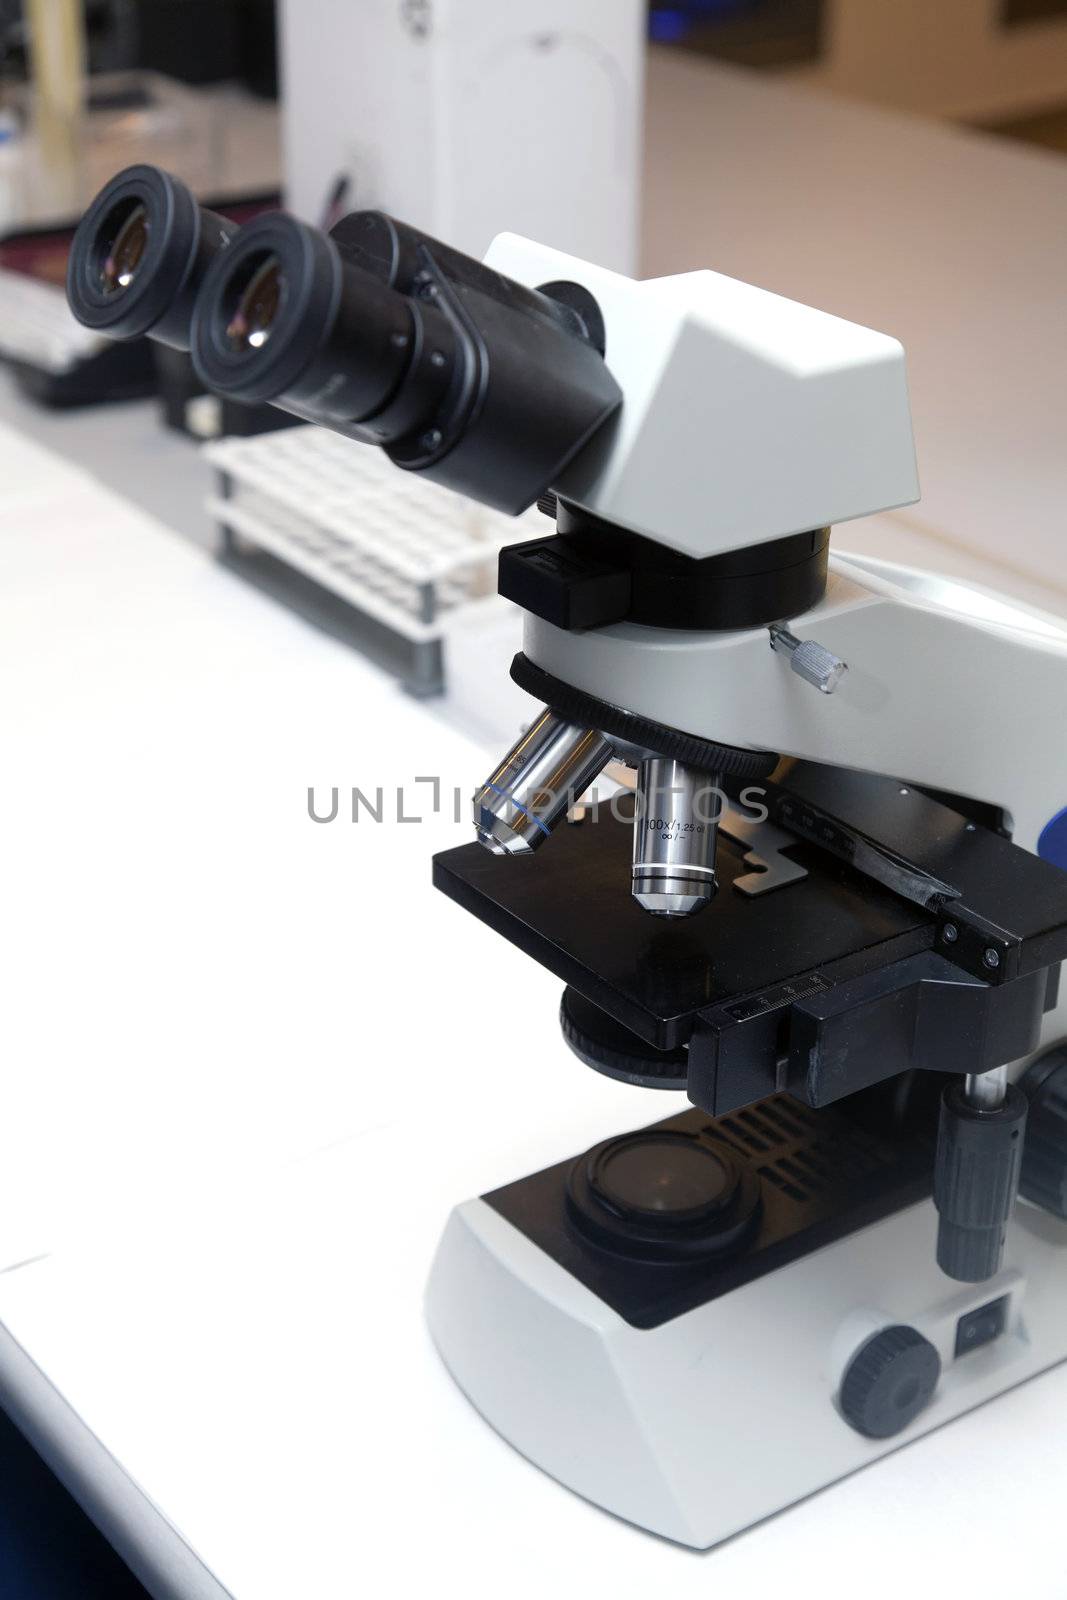 Microscope in a Laboratory by Portokalis